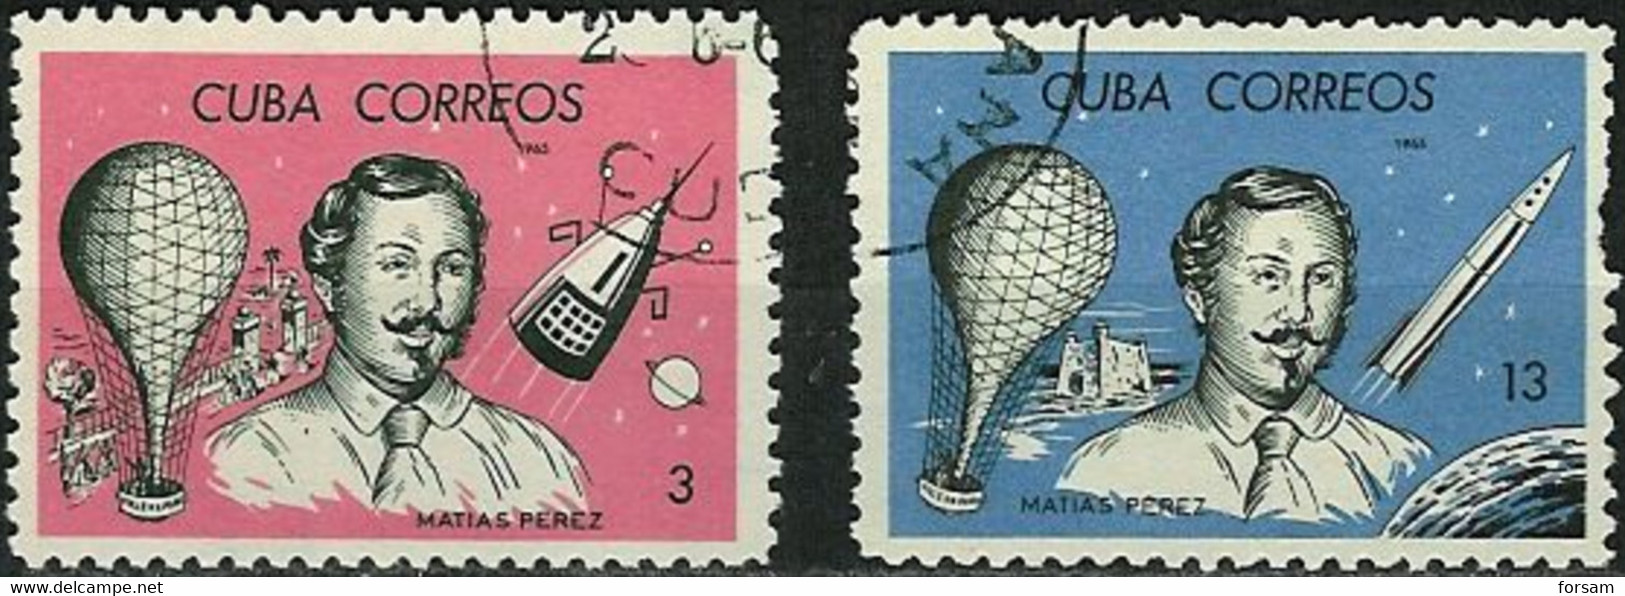 CUBA..1965...Michel # 1033-1034...used...MiCV - 2.20 Euro. - Gebruikt